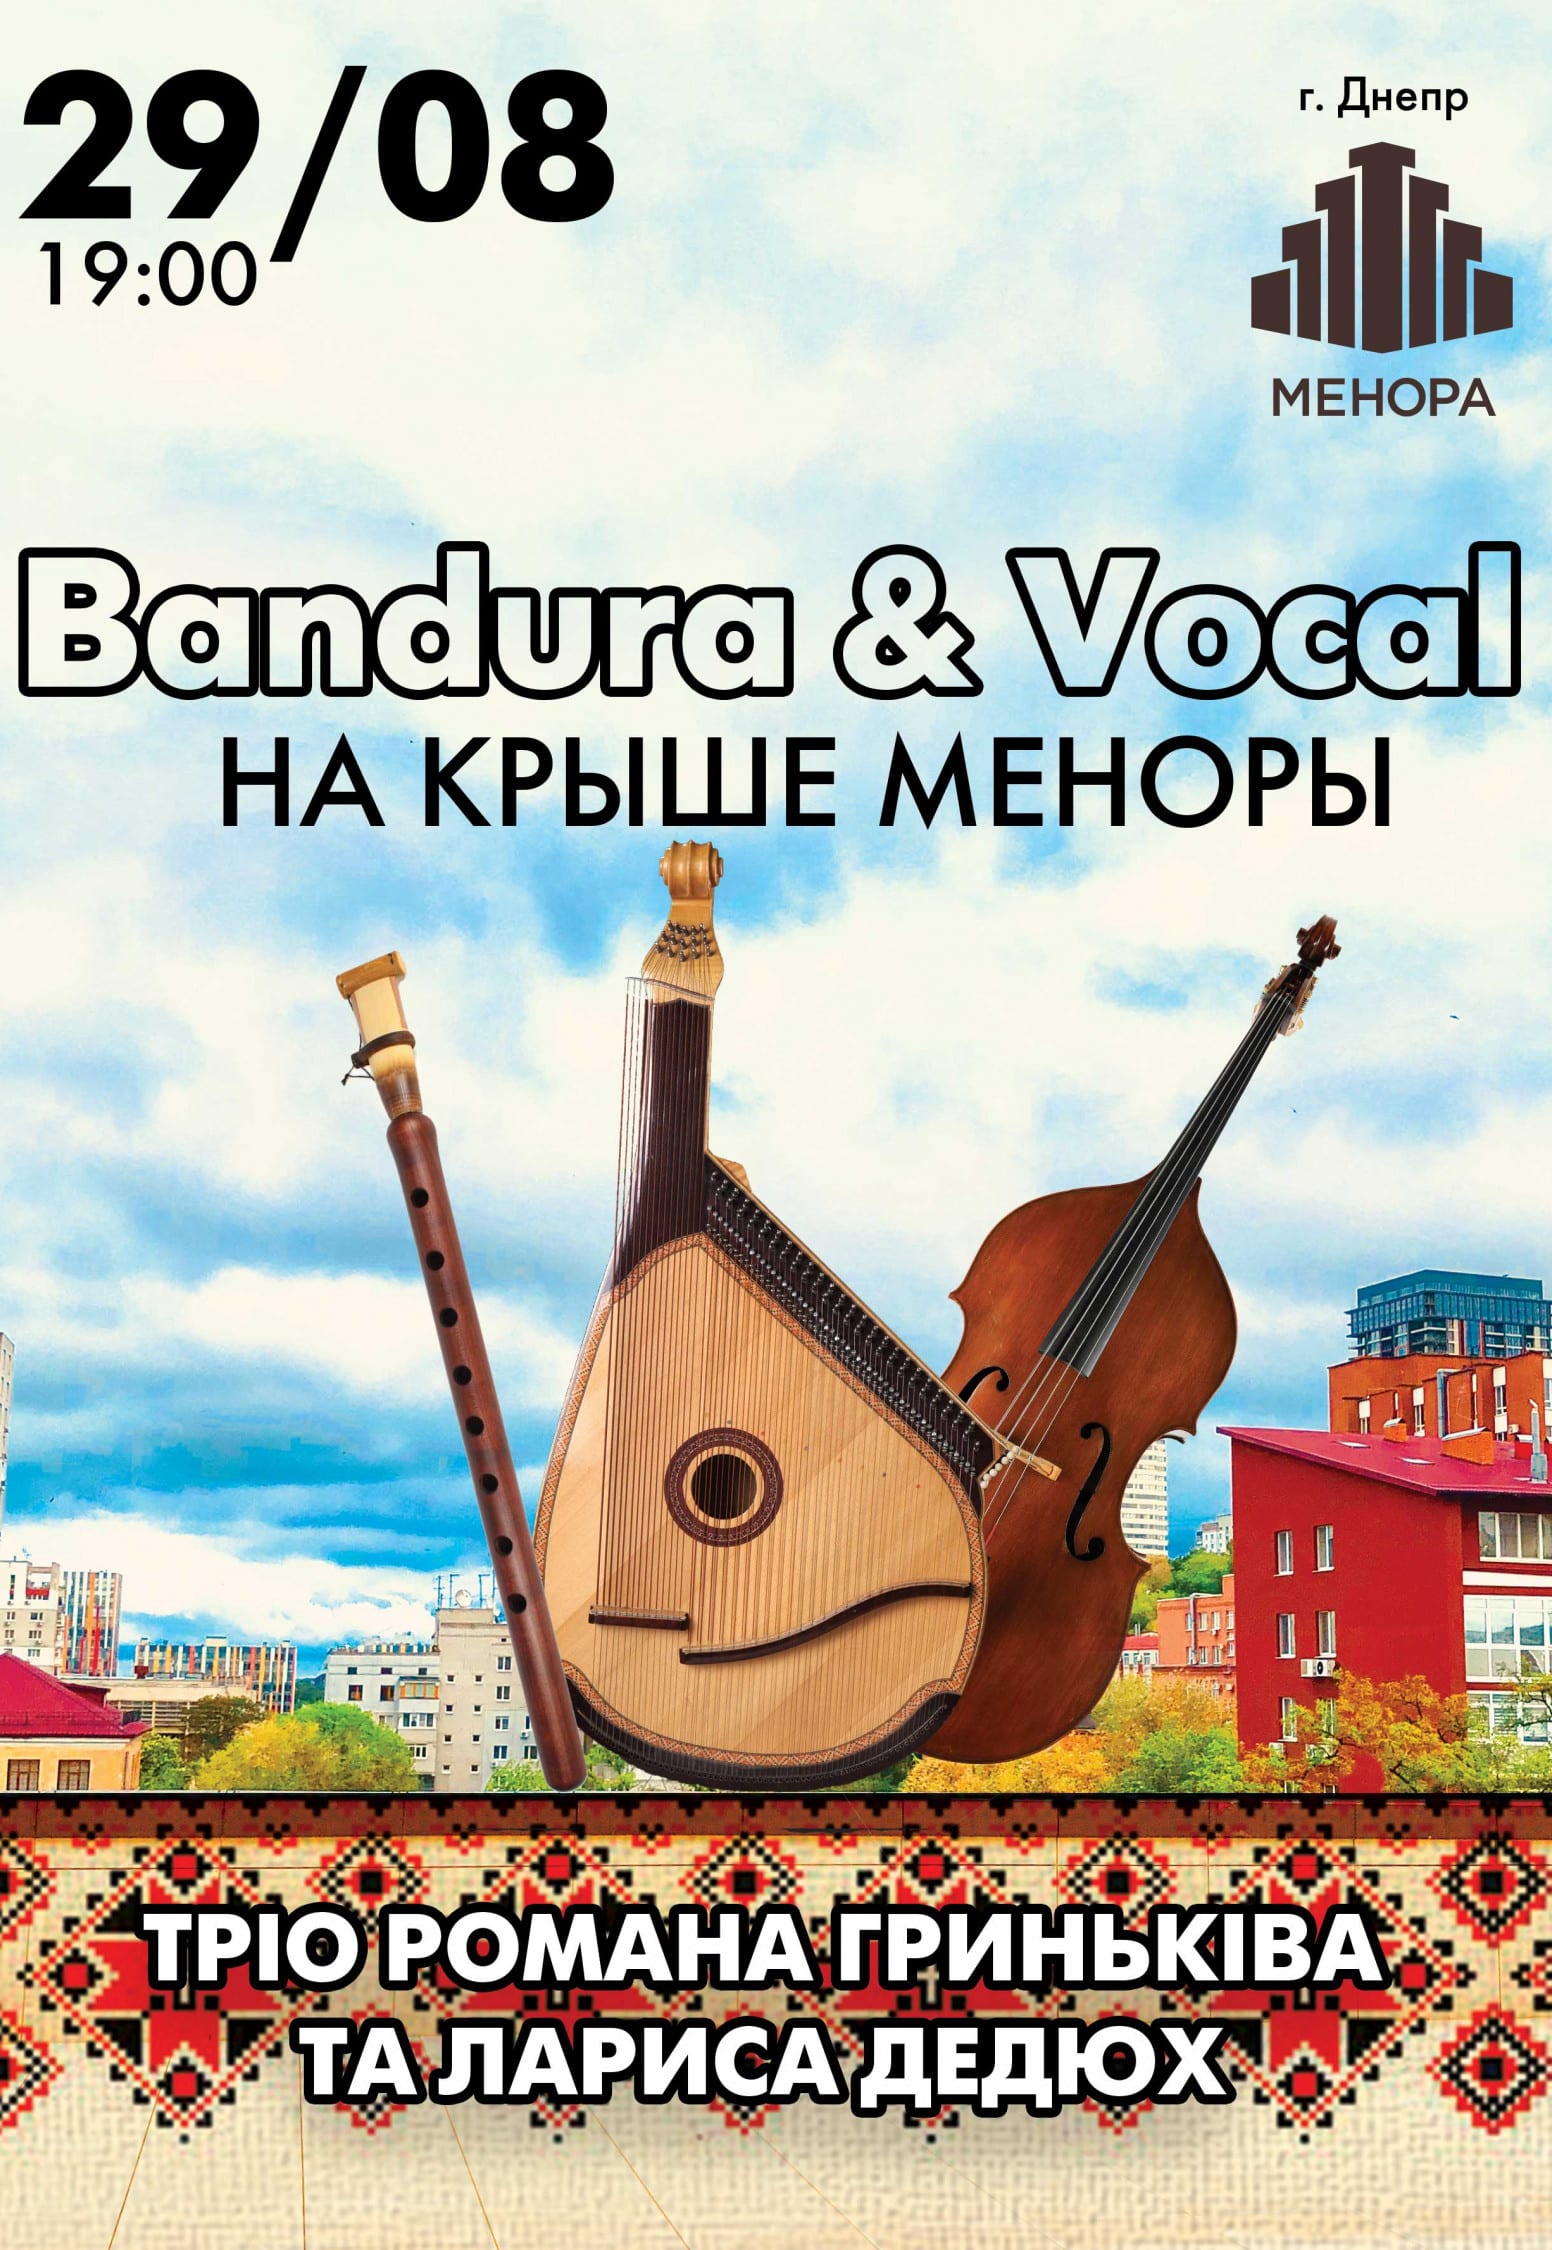 Bandura & Vocal на Крыше Меноры Днепр, 29.08.2019, цена, фото. Афиша Днепра